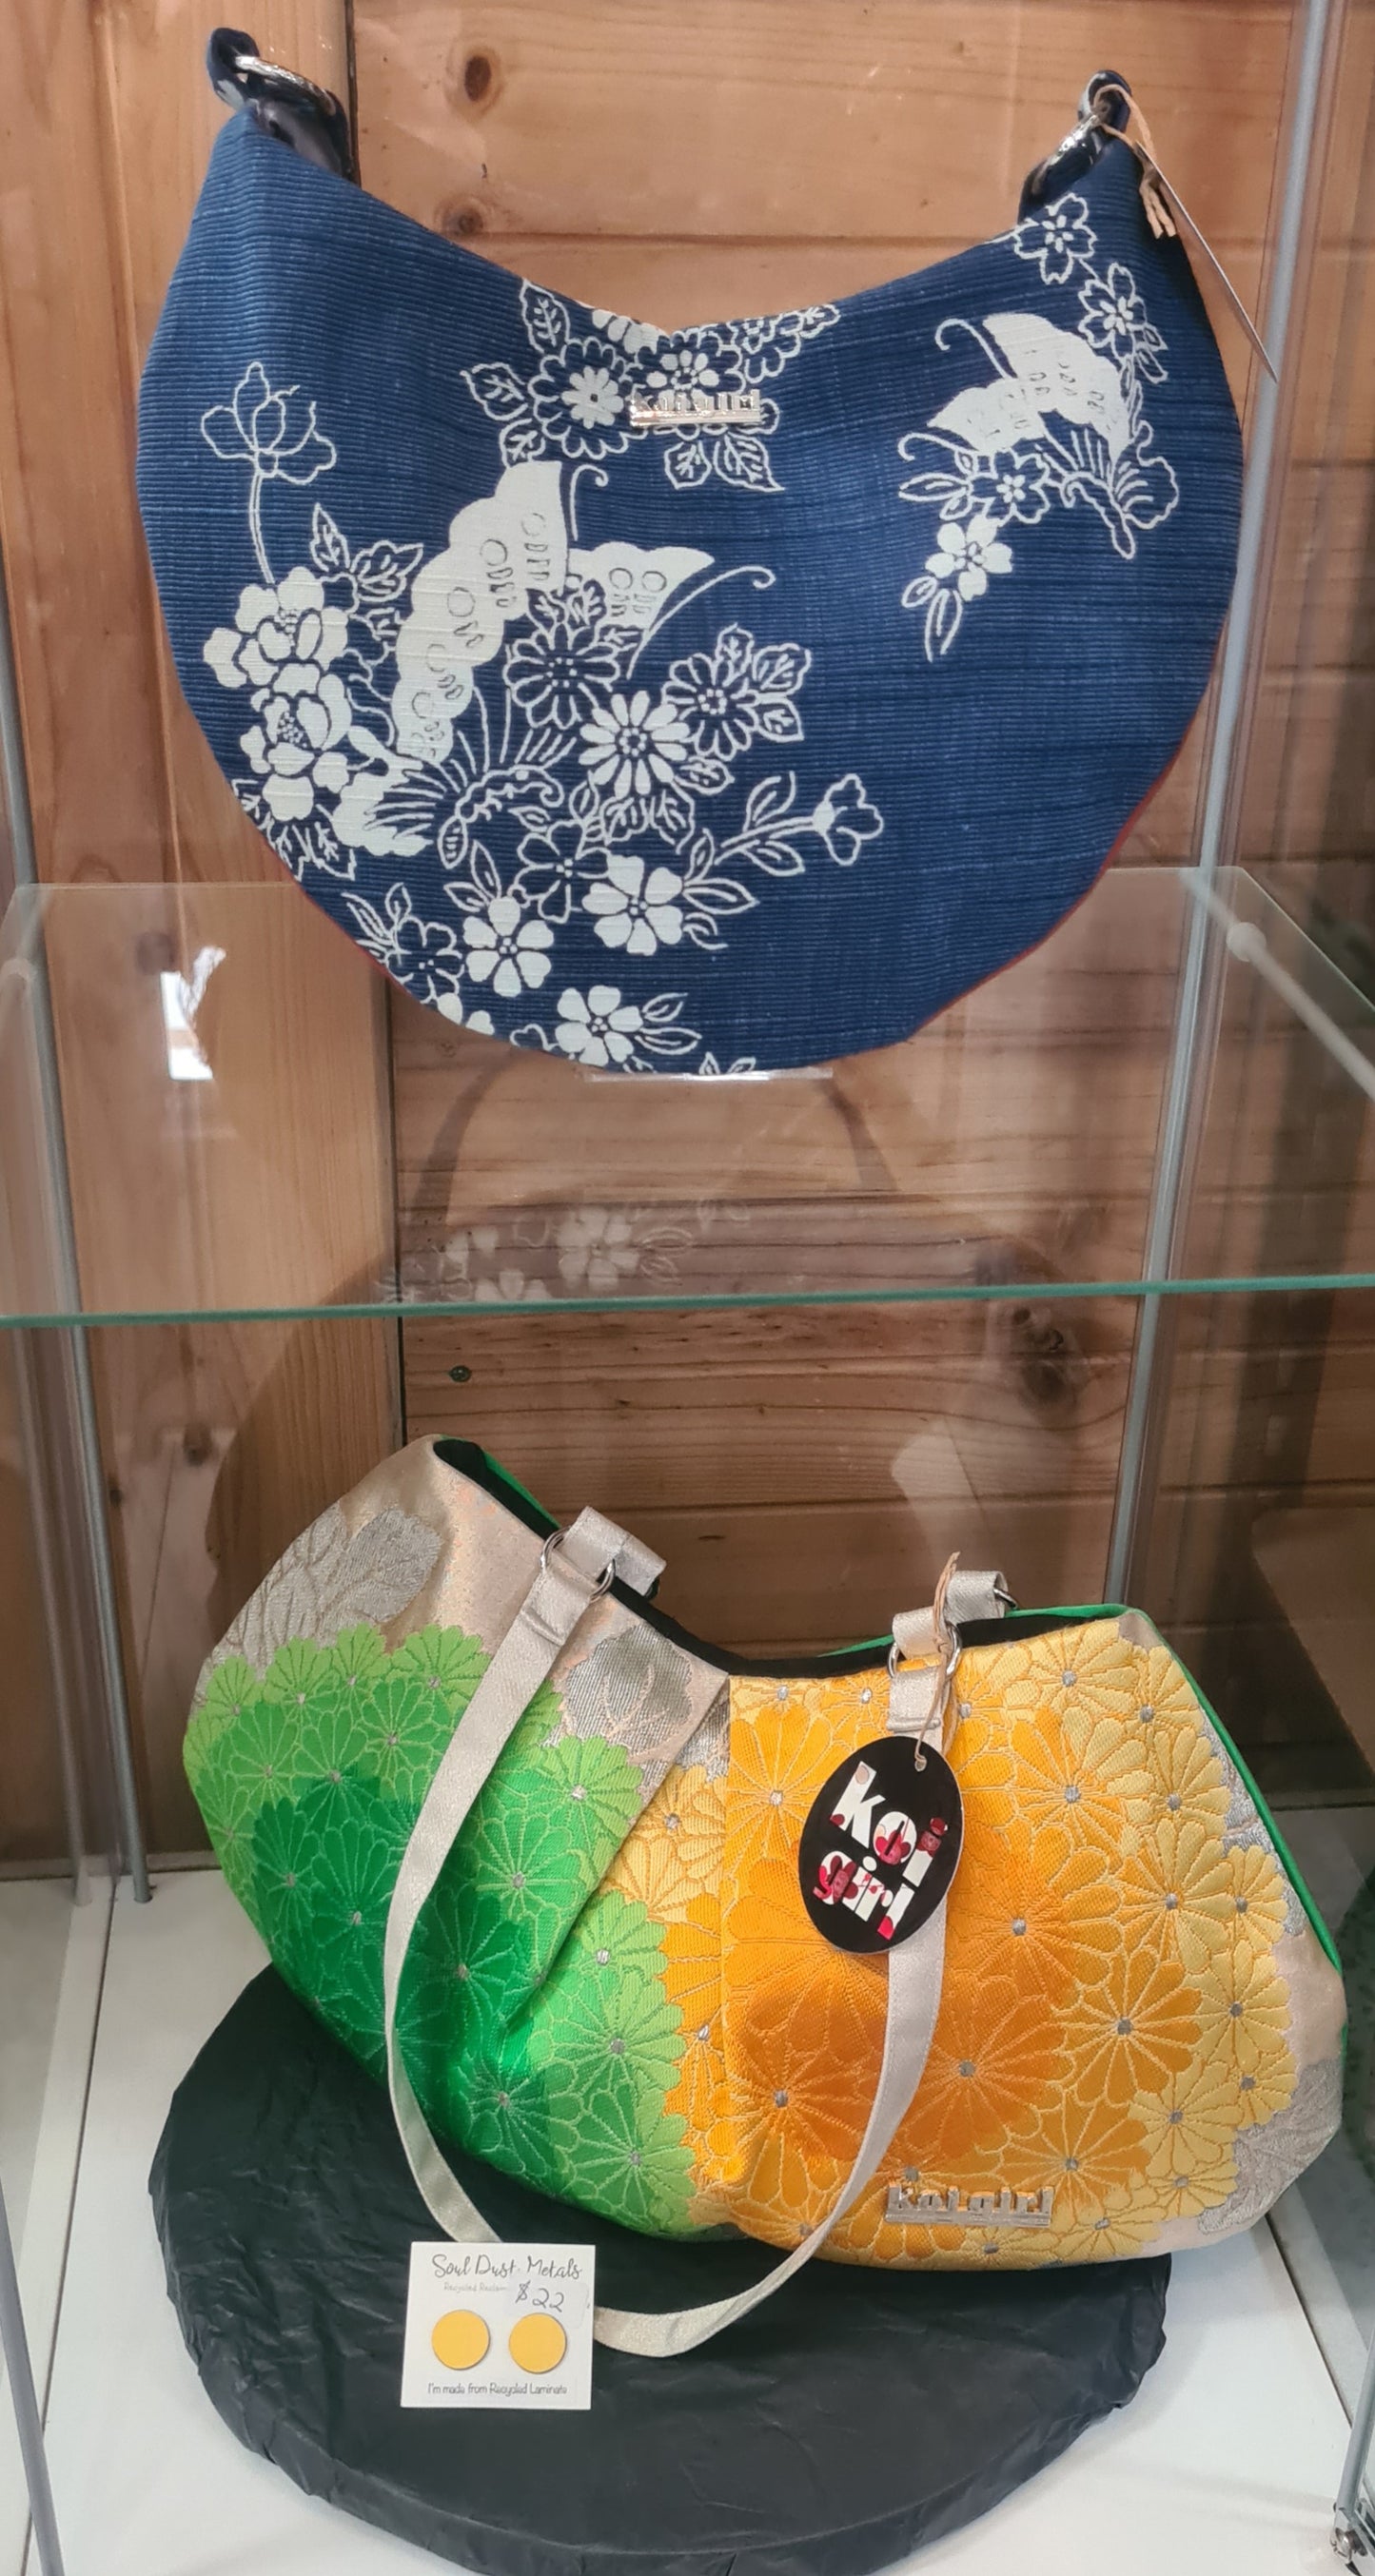 Purse / Clutch - Authentic Vintage Silk Kimono and Obi belts